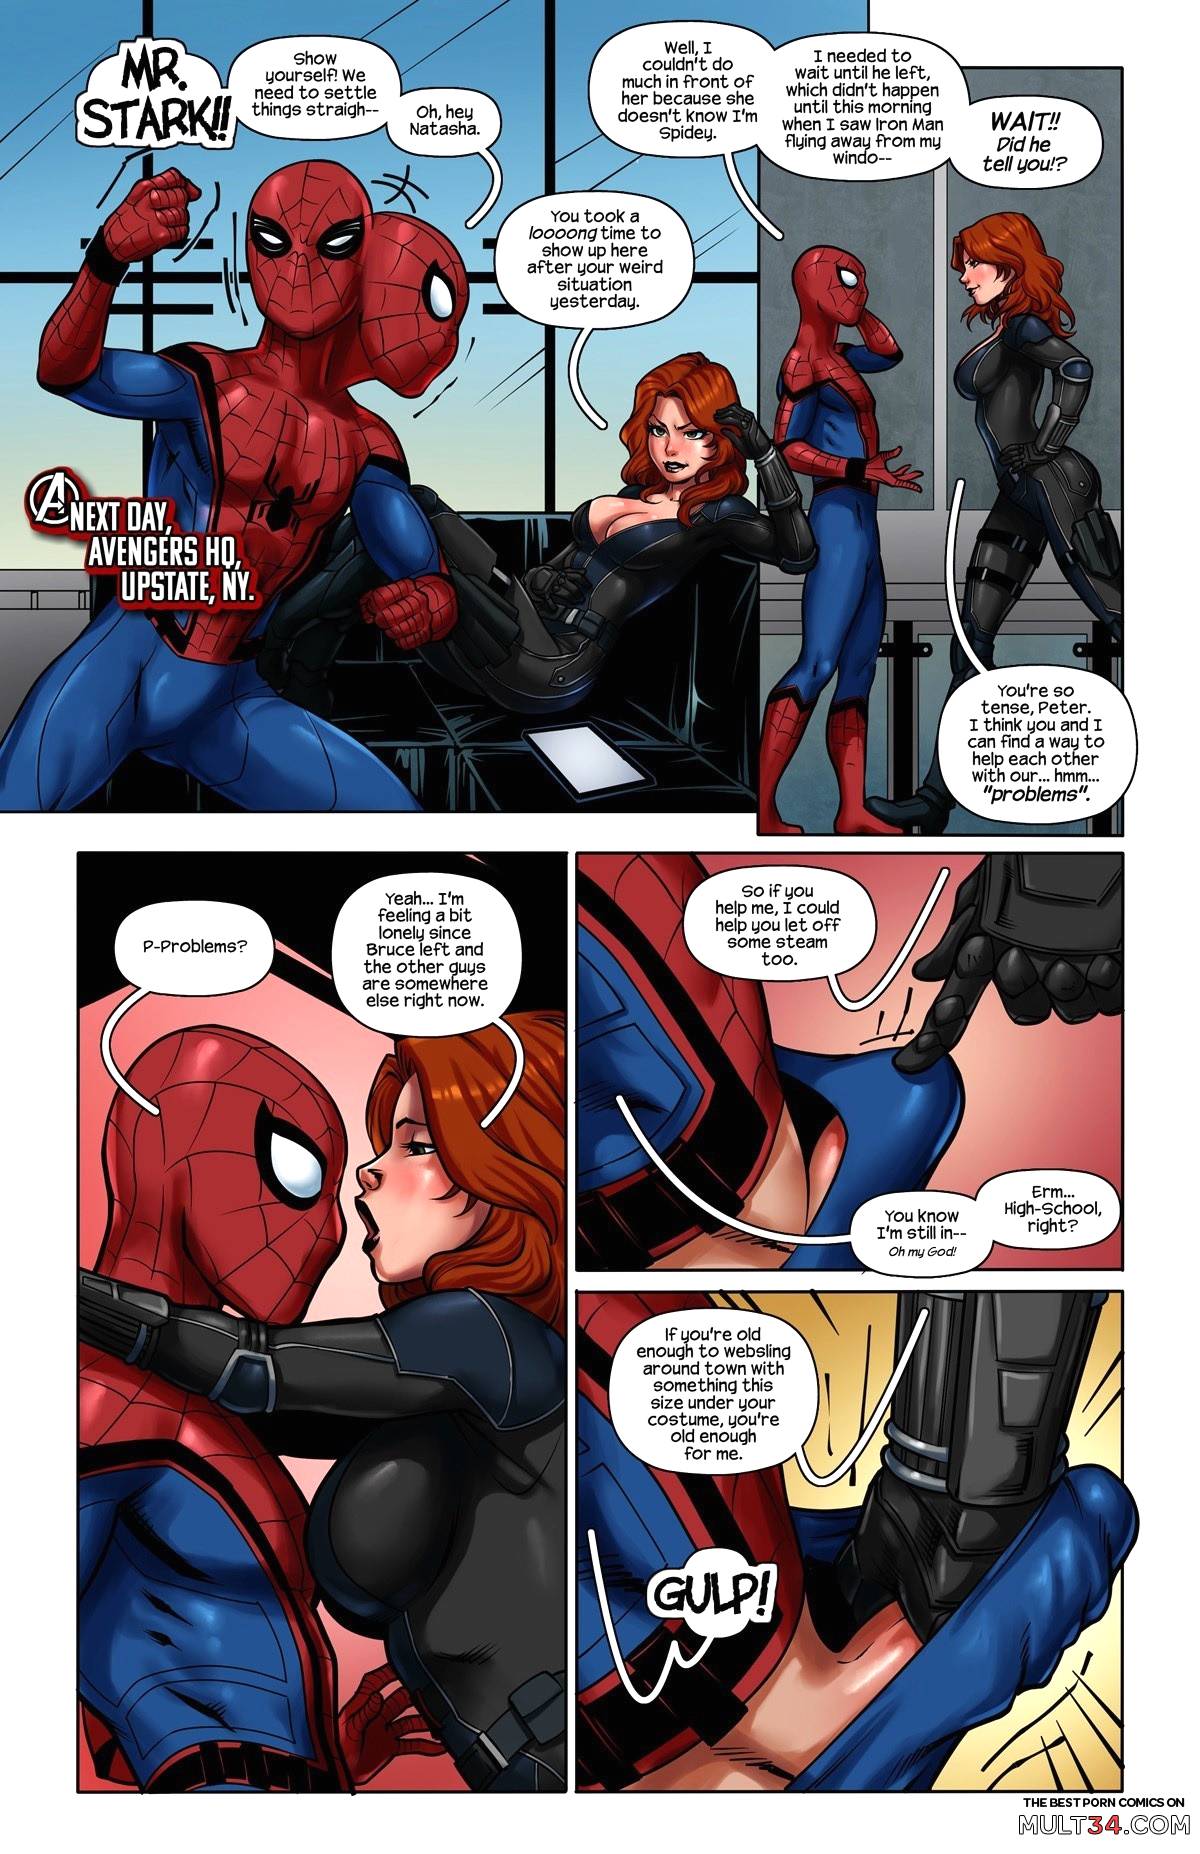 Black Widow Porn Comics Strip - Spiderman - Civil war porn comic - the best cartoon porn comics, Rule 34 |  MULT34